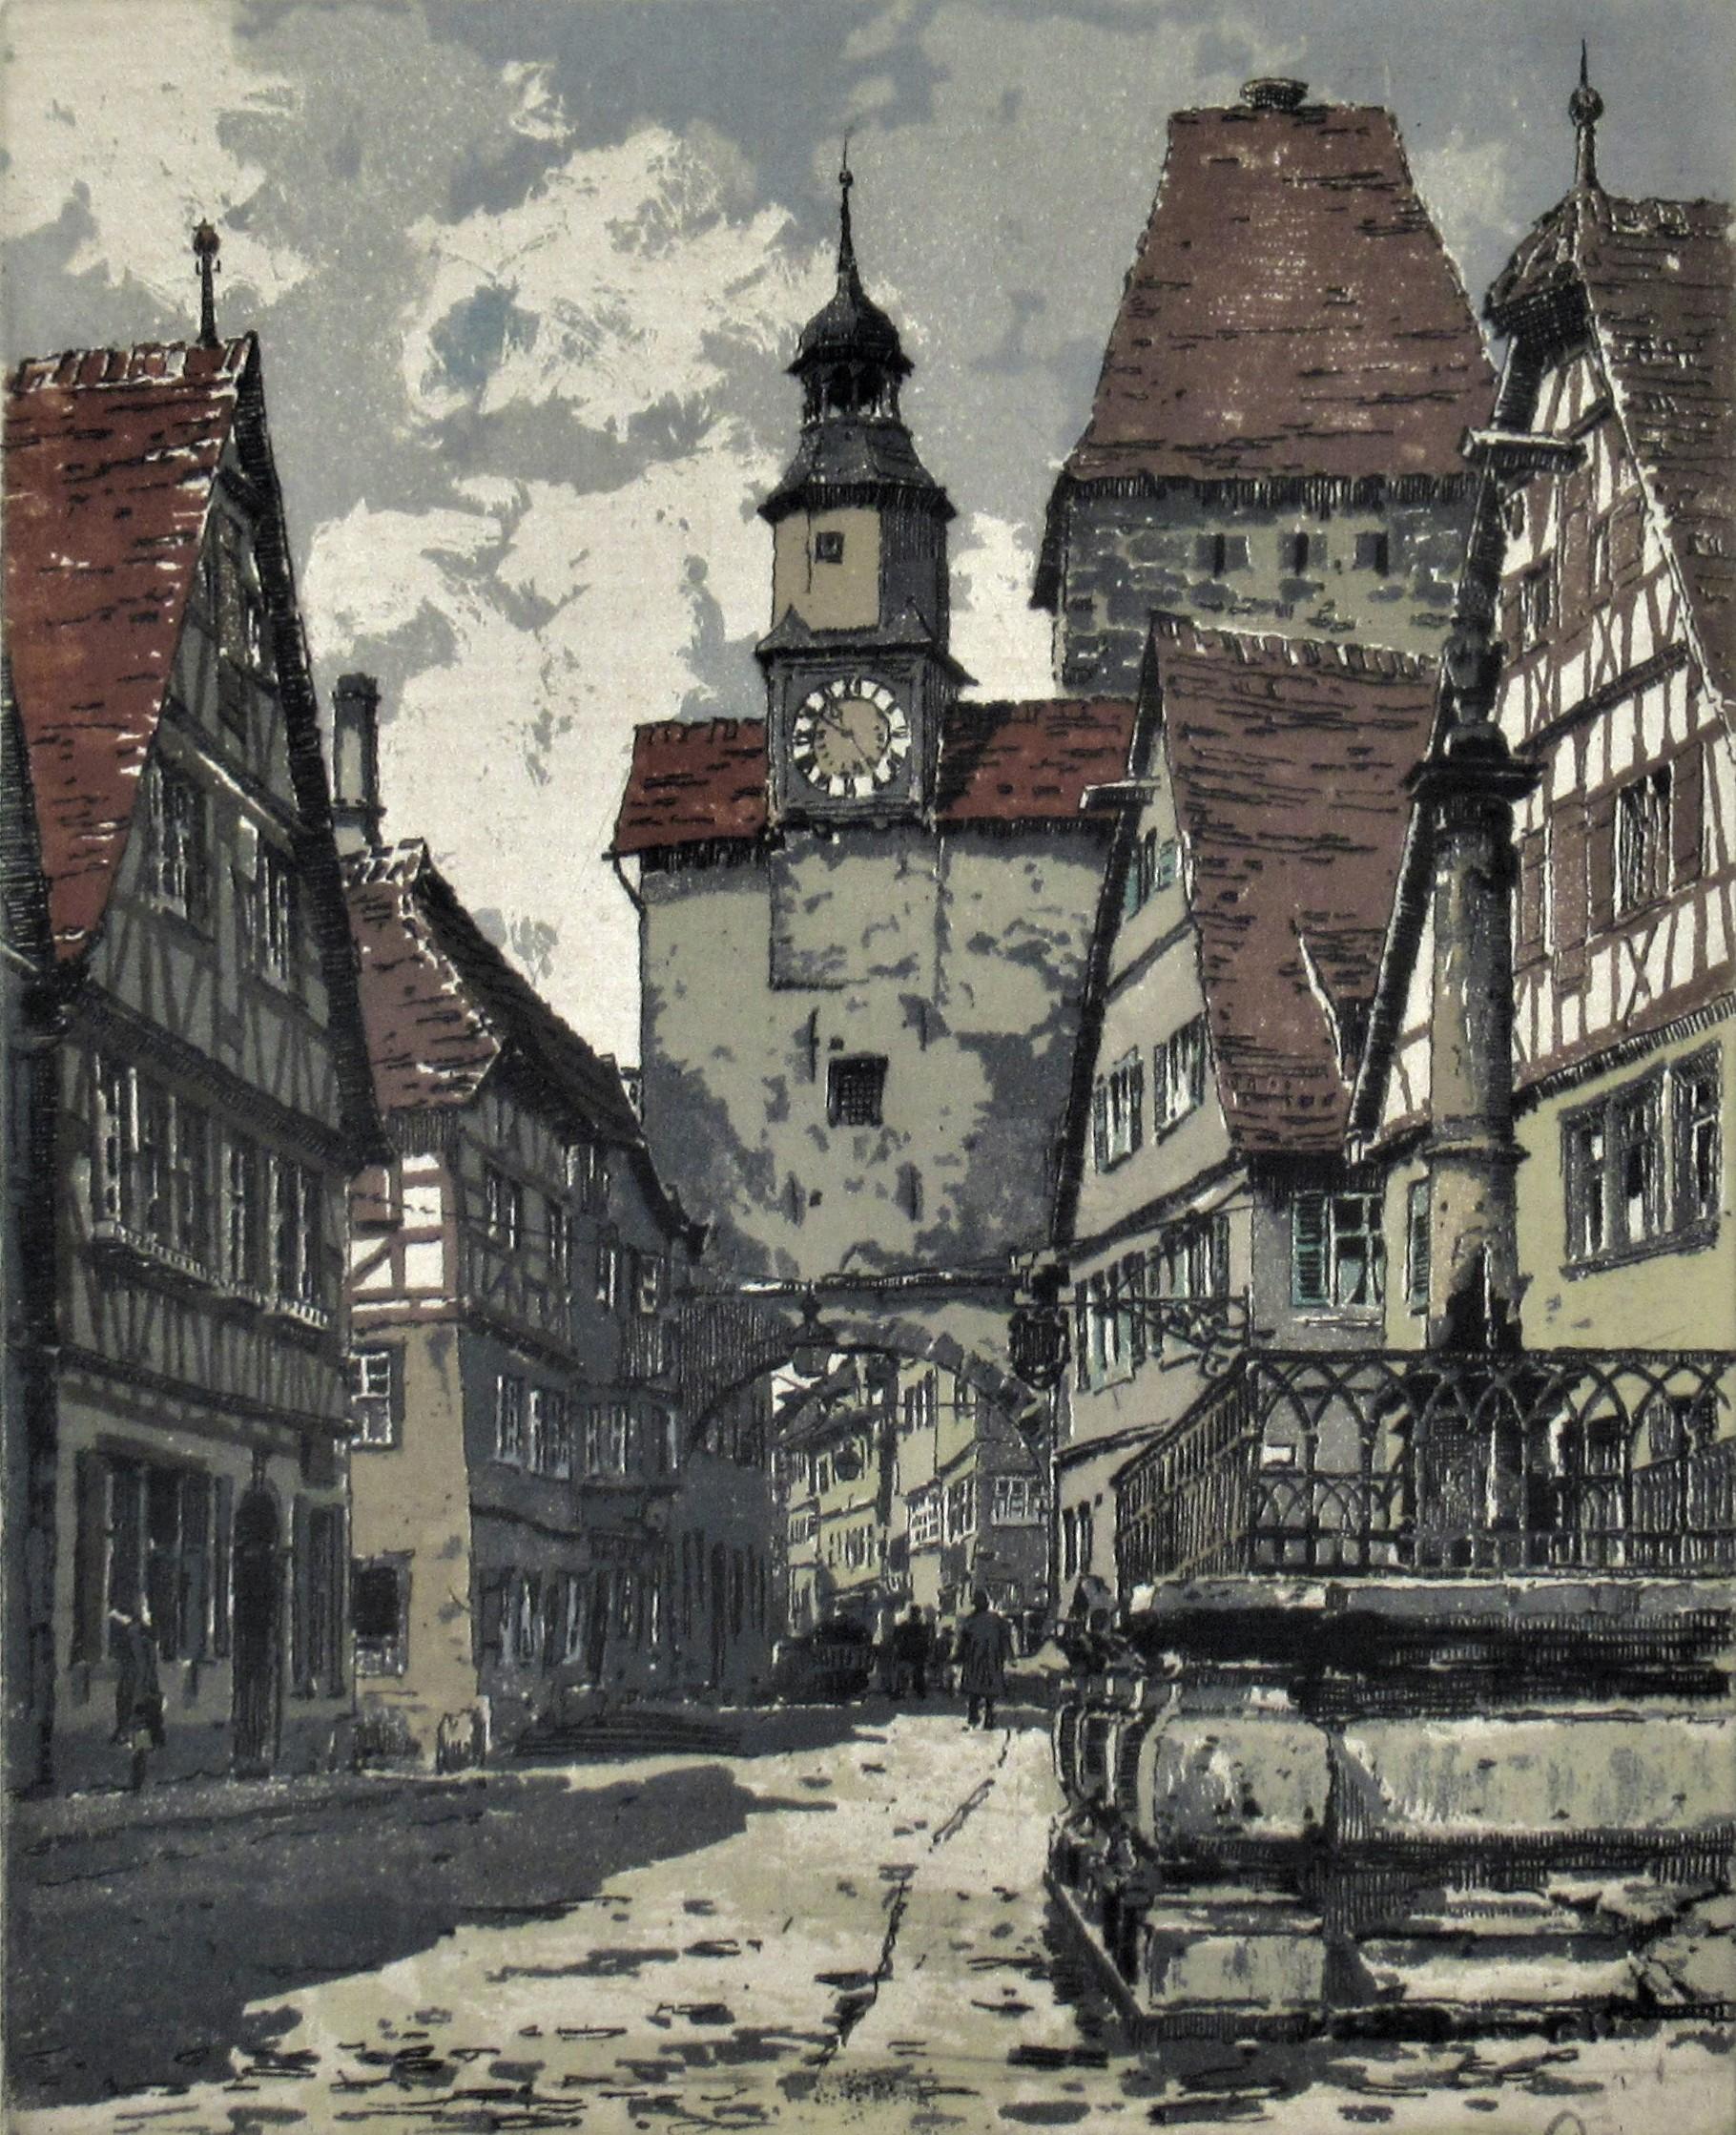 Rothenburg, Germany - Print by Hans Figura